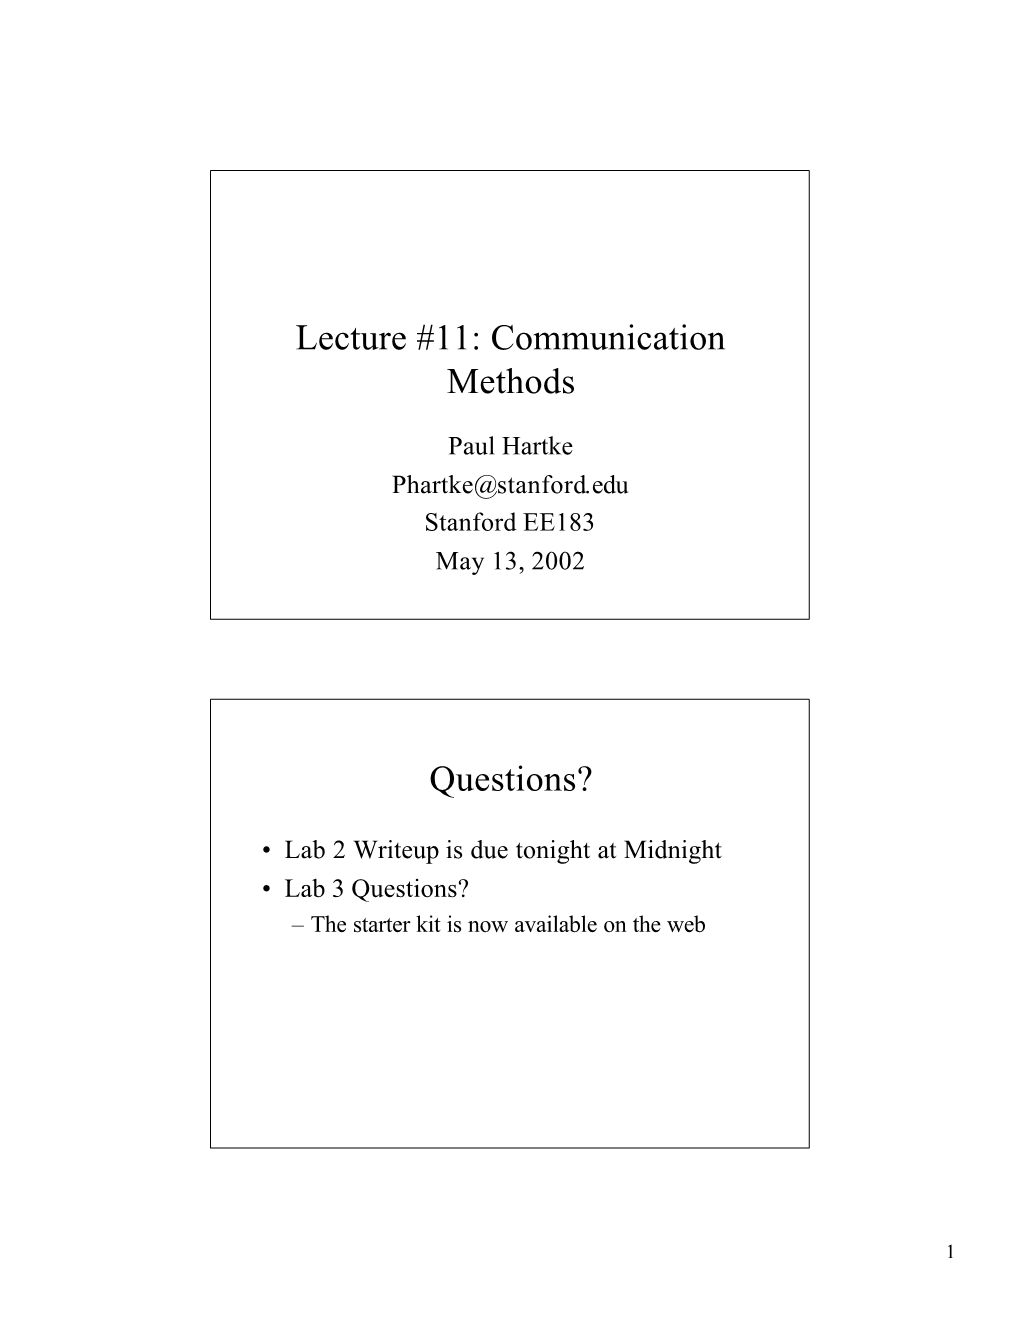 Lecture #11: Communication Methods Questions?